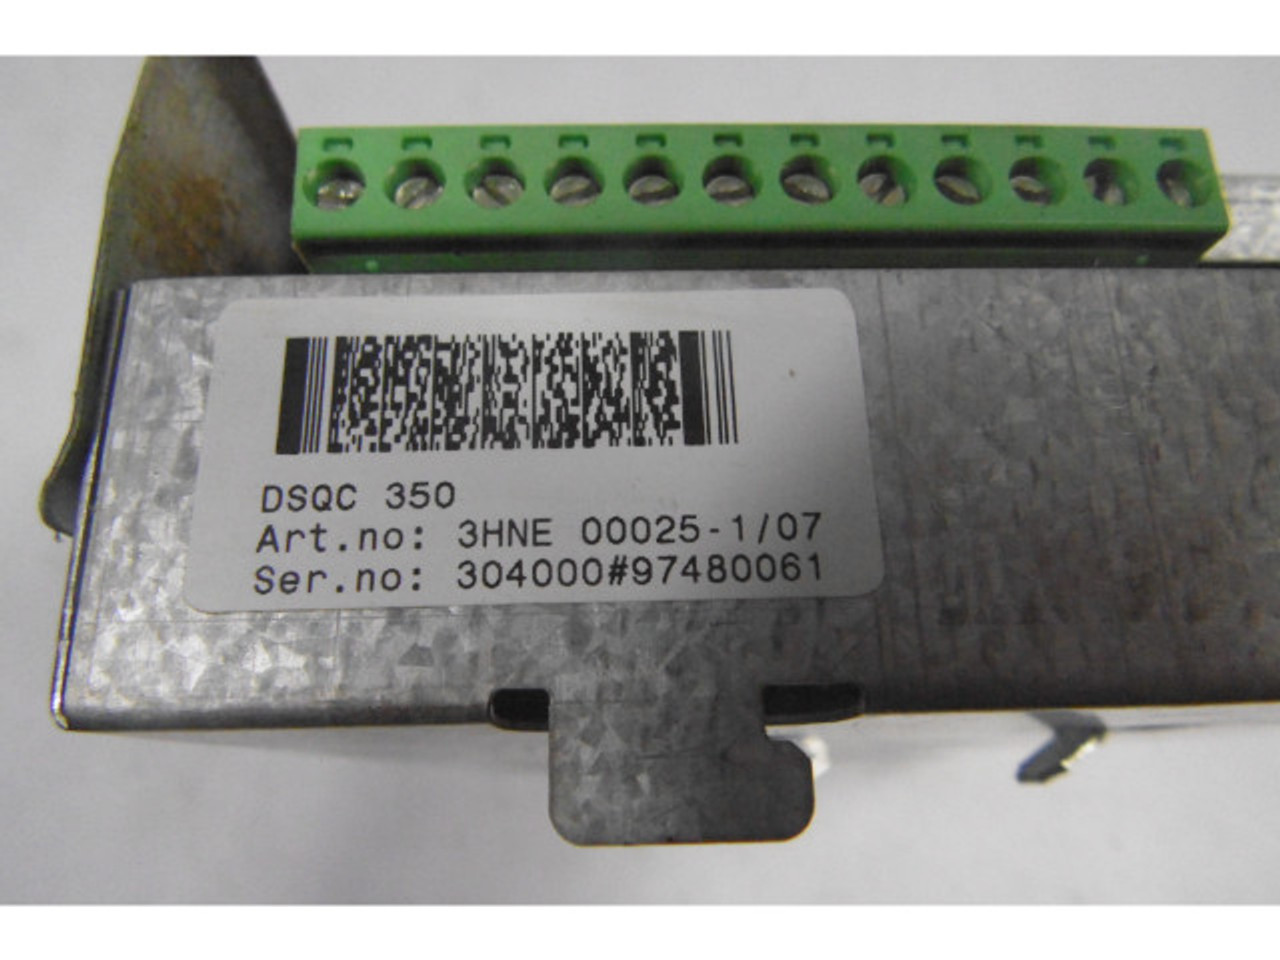 ABB 3HNE-00025-1/07 DSQC-350 I/O Controller Board USED